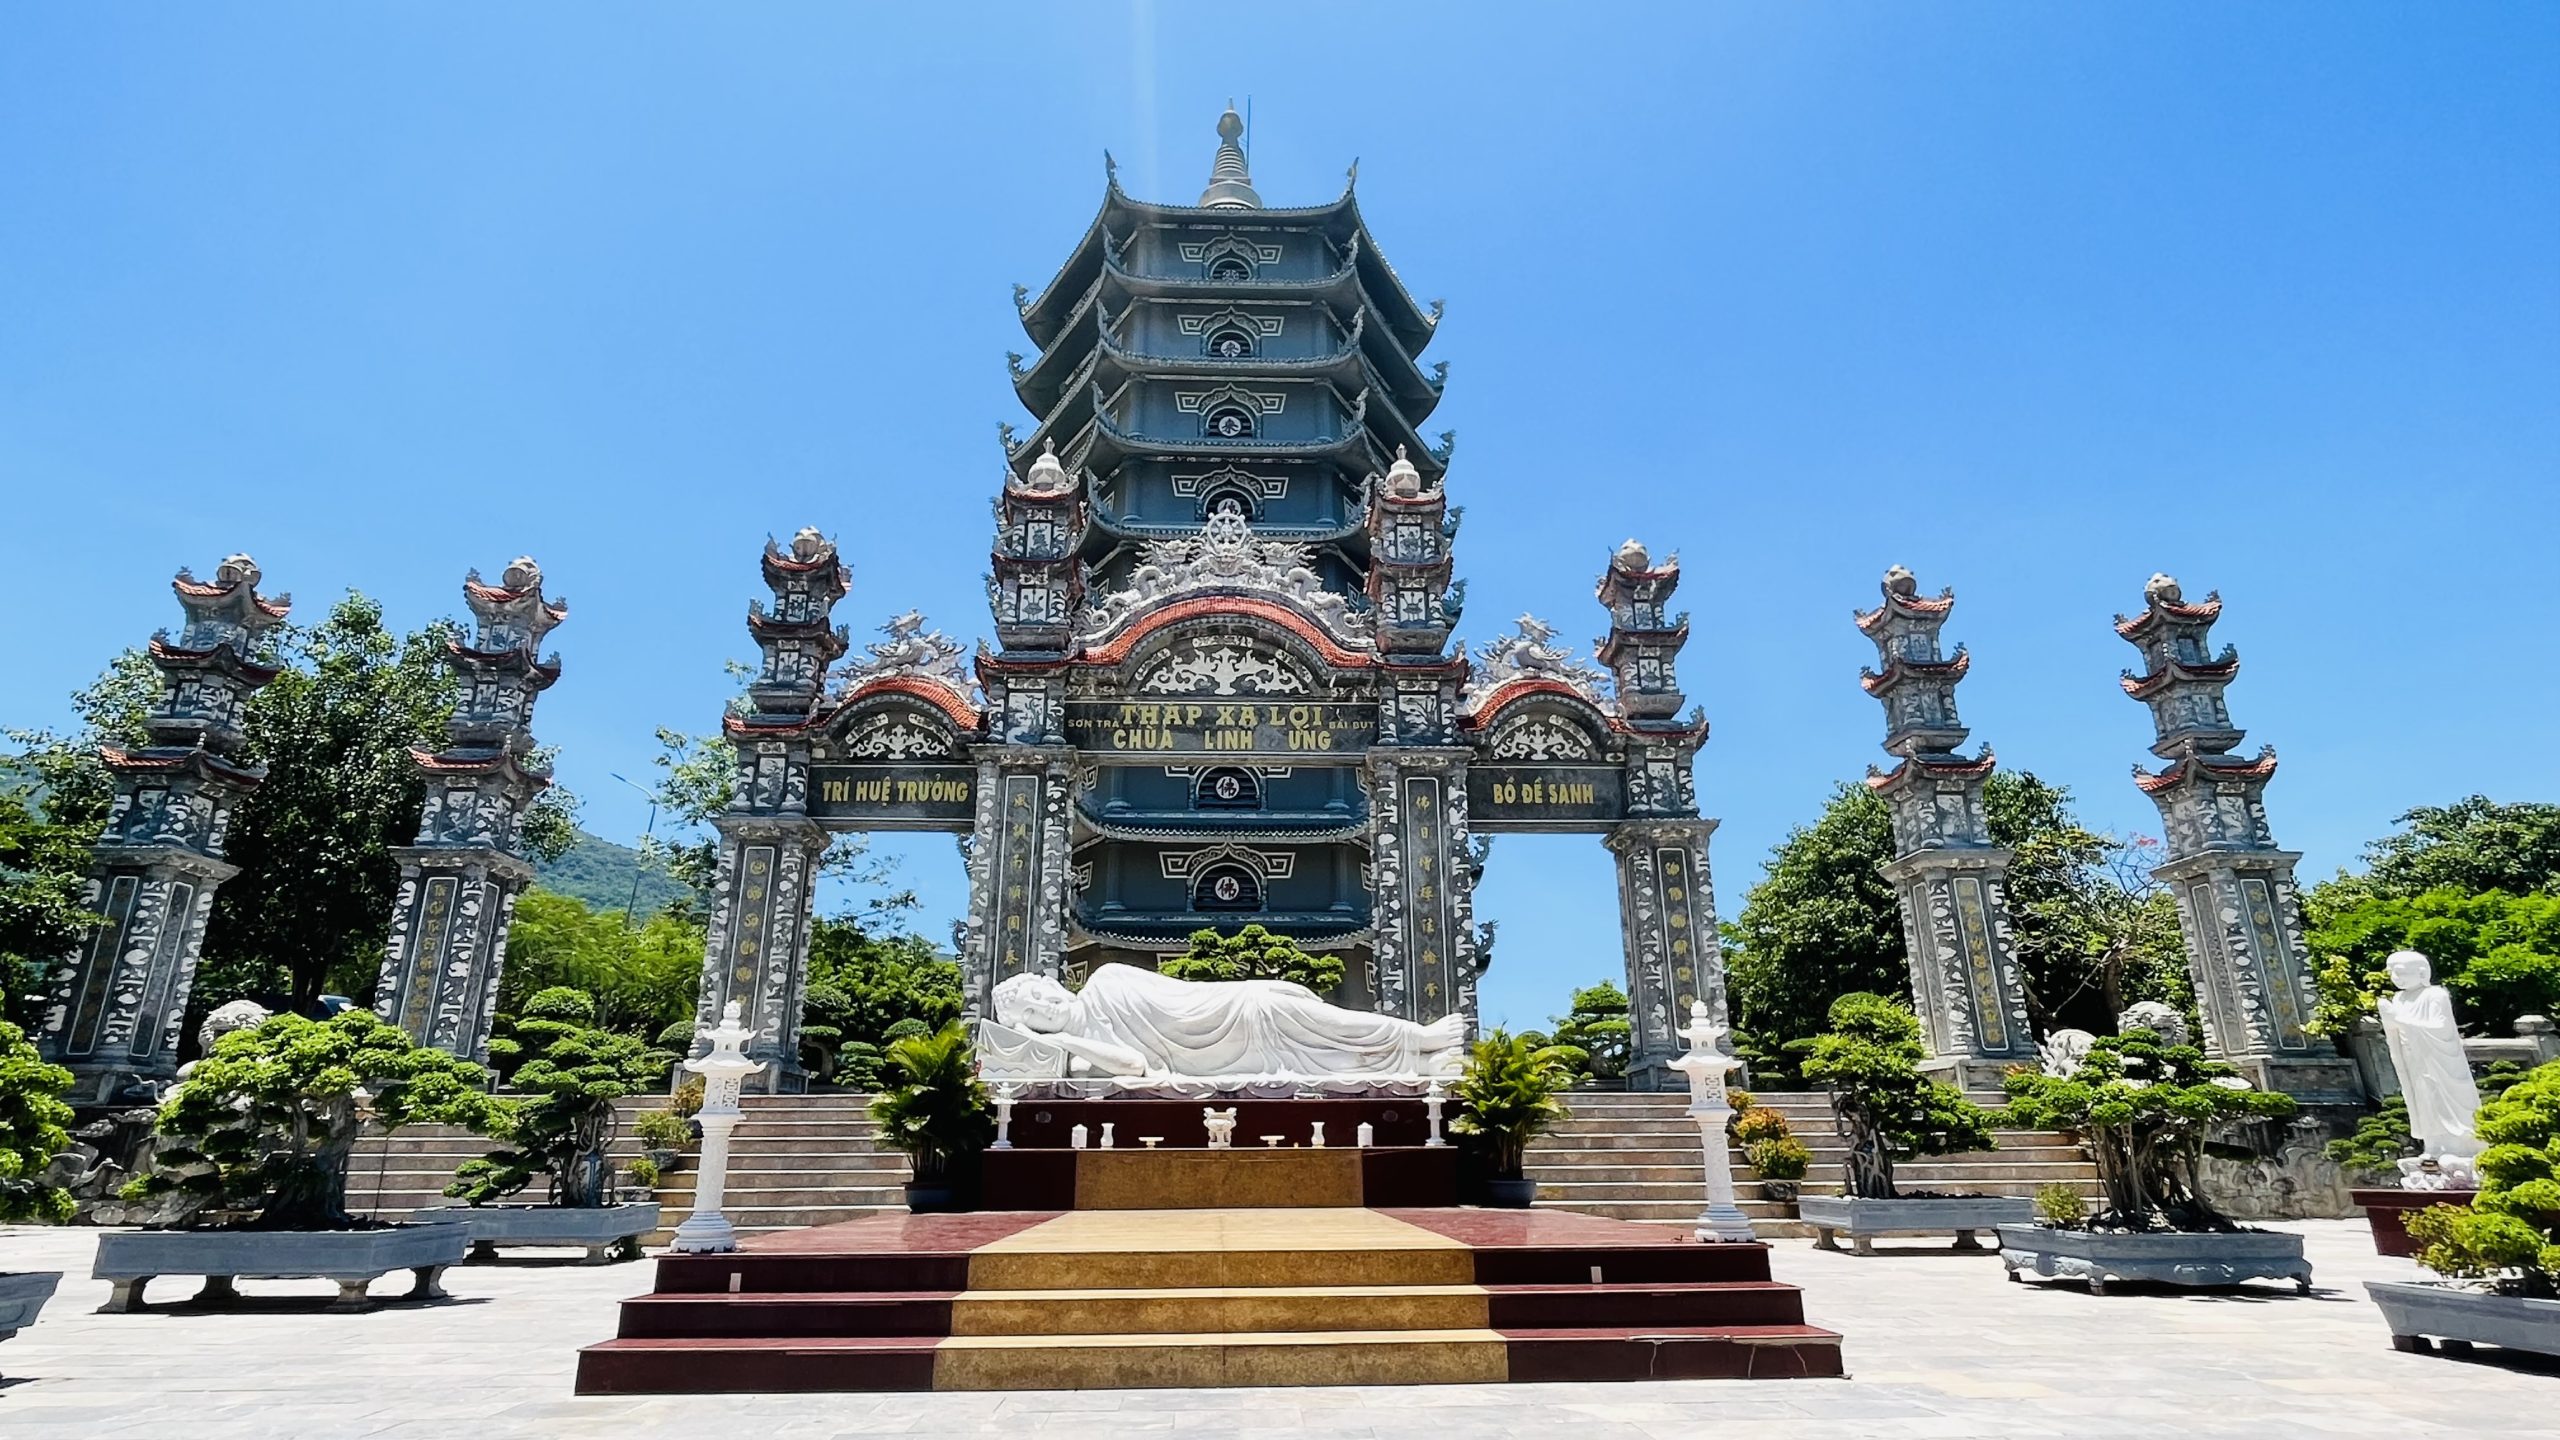 Chua Linh Ung Temple